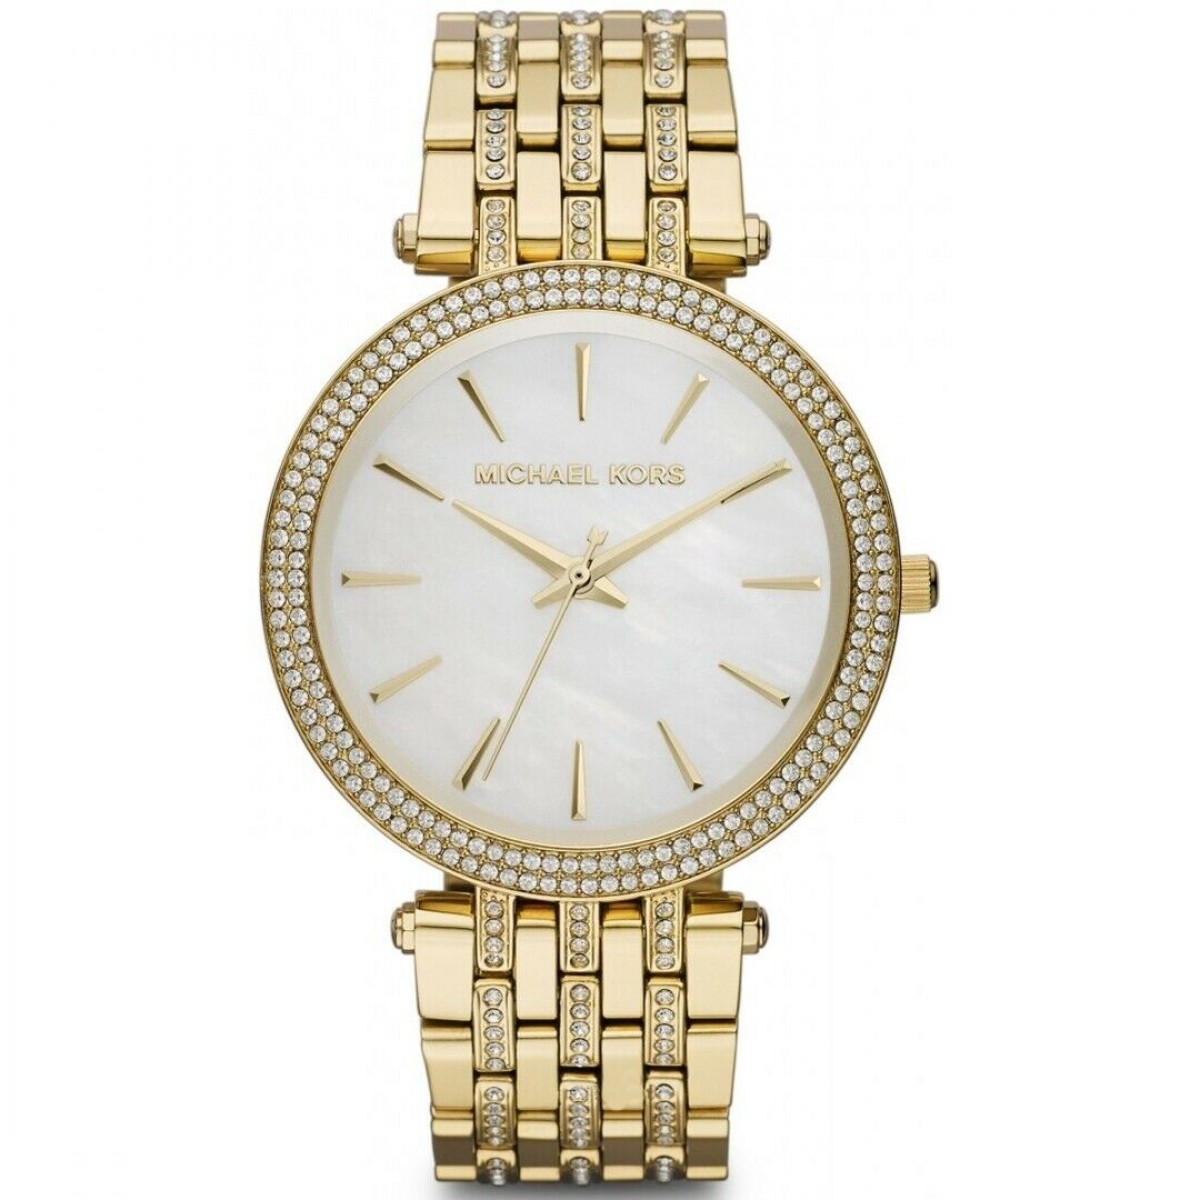 Michael Kors MK3219 Elegant Gold Wristwatch for Women - Jonathan's Watches